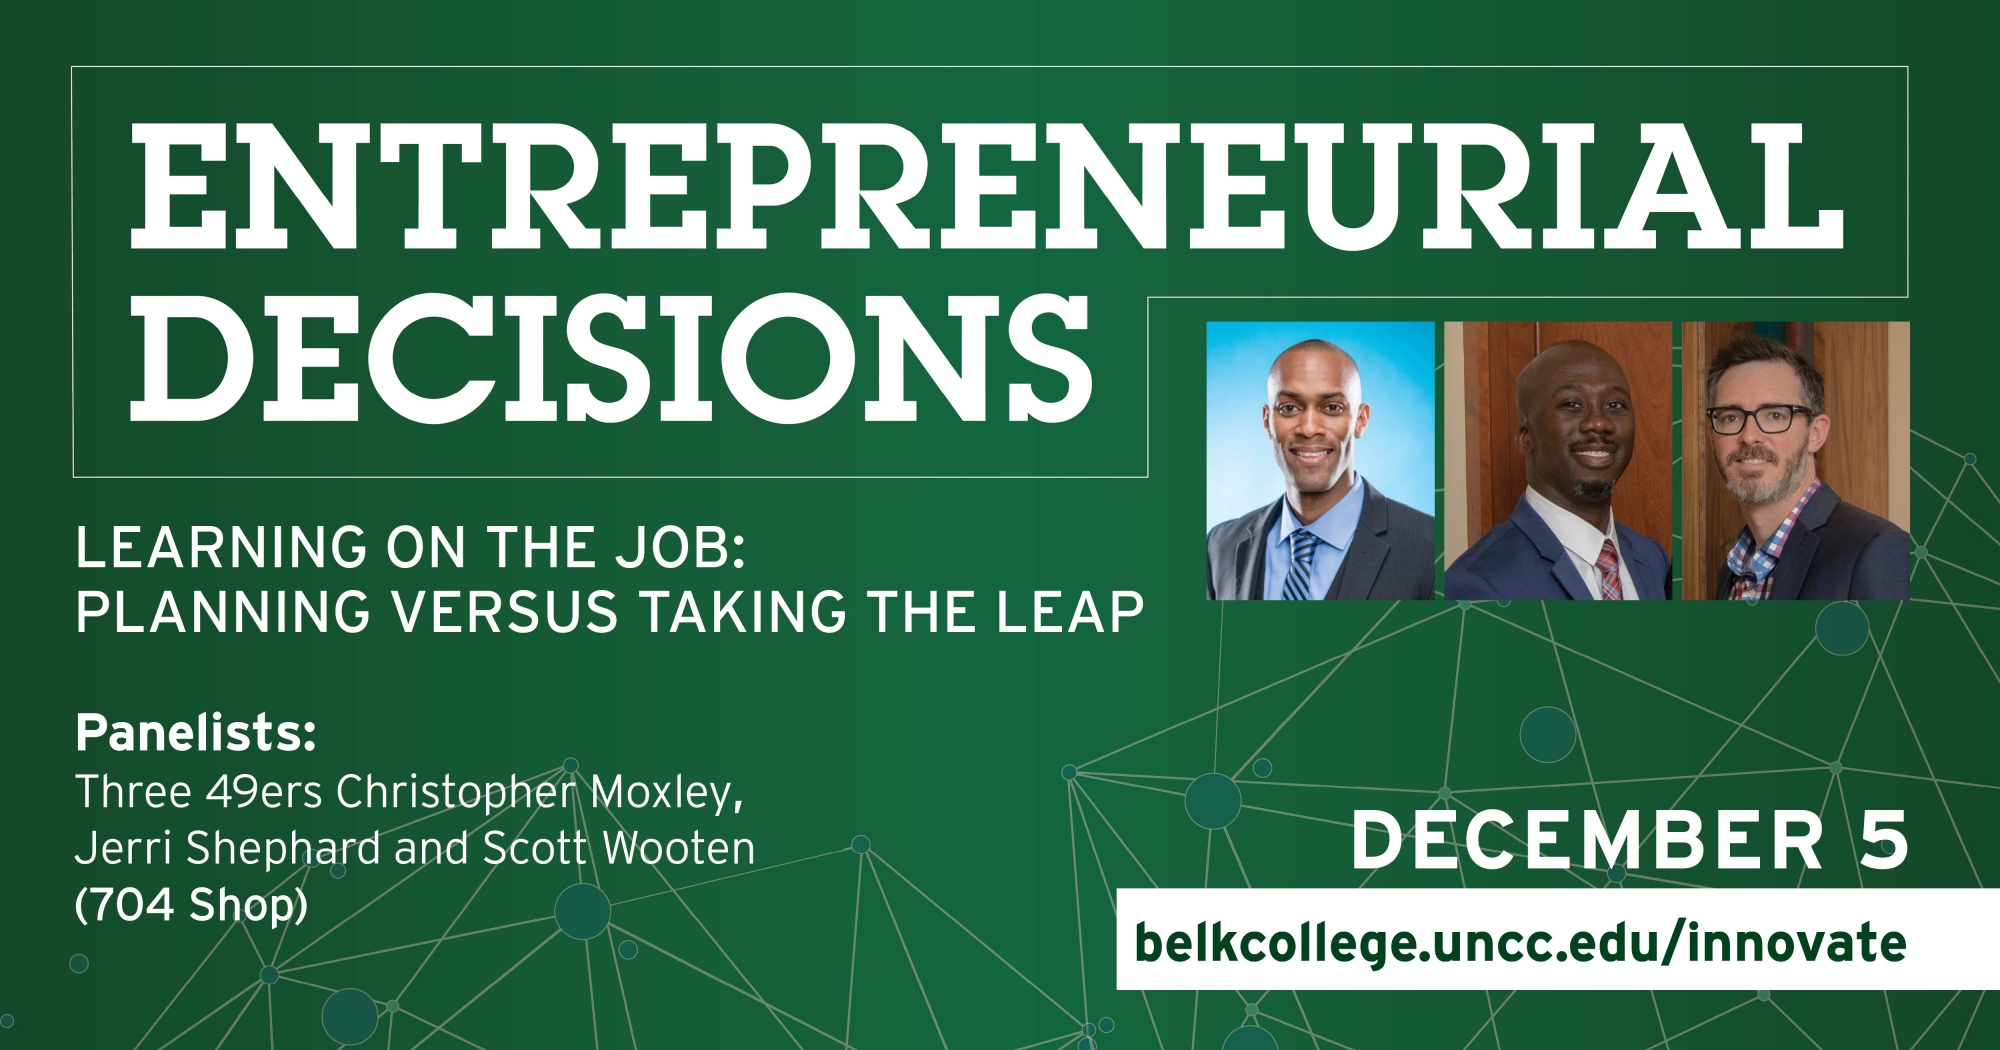 Entrepreneurial Decisions graphic - December 5